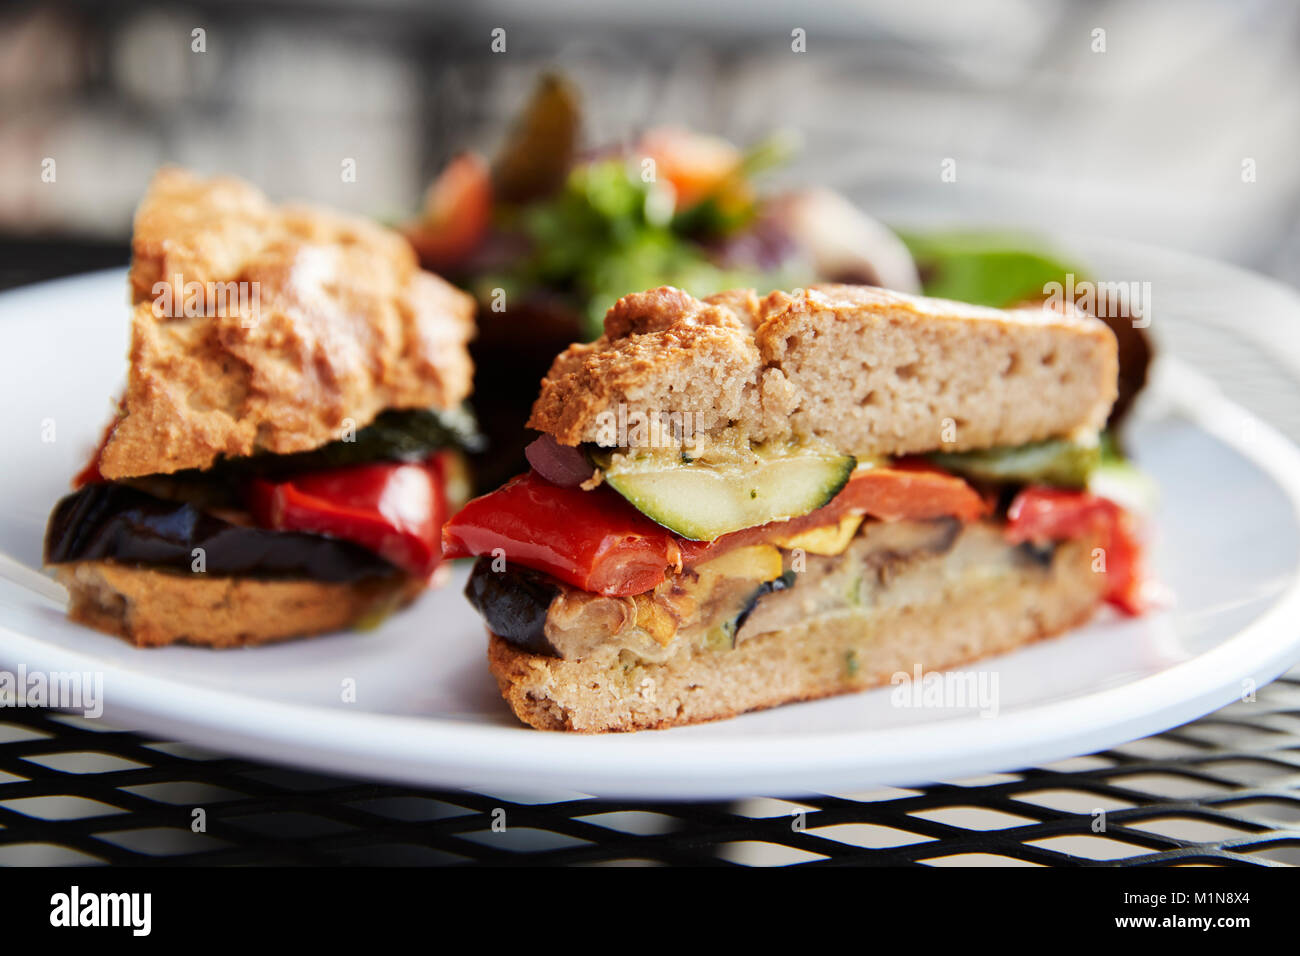 Healthy Vegetarian Sandwich On Plate In Coffee Shop Stock Photo